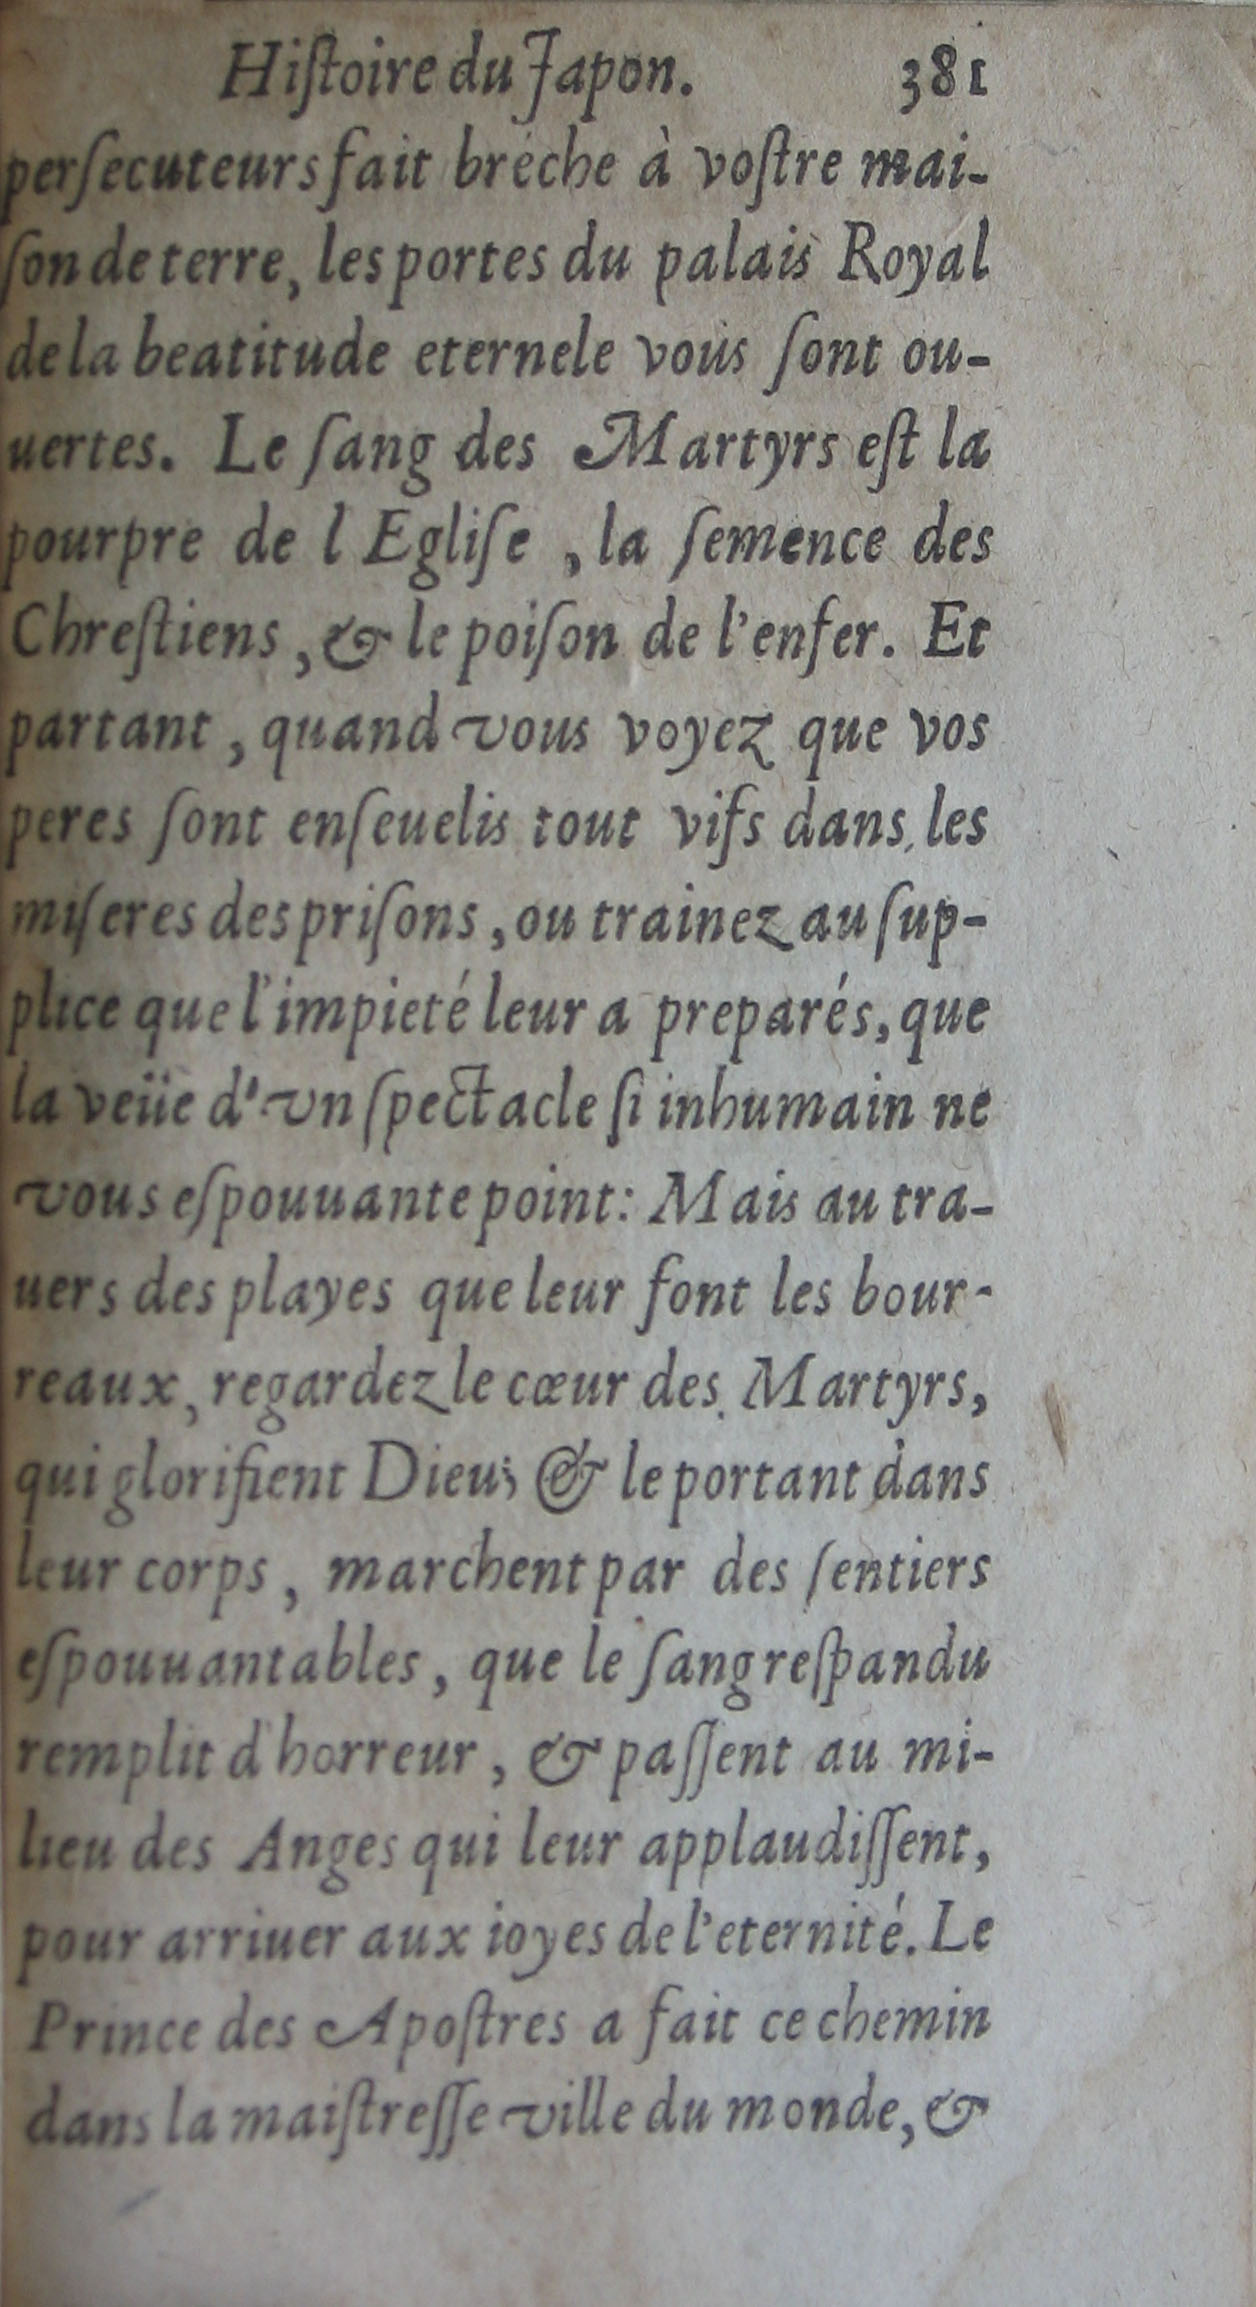 p. 381.JPG